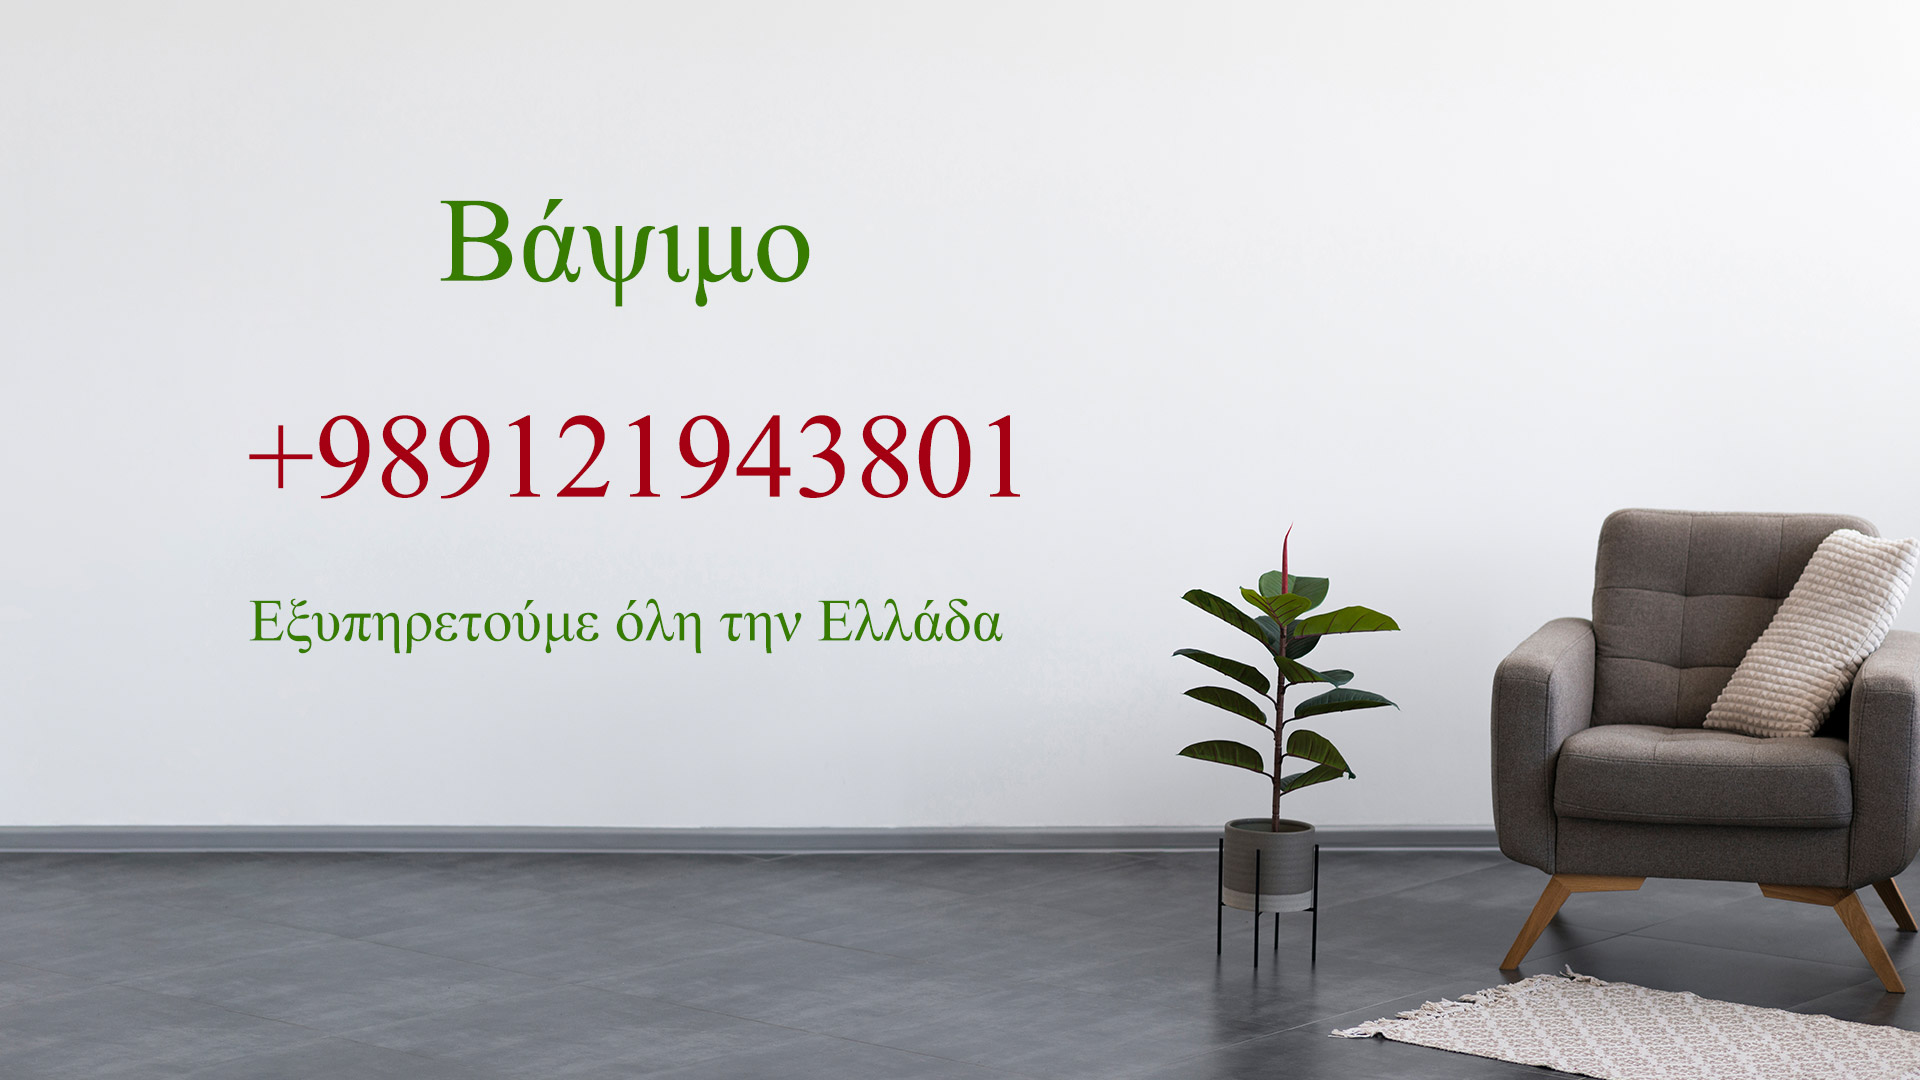 vapsimo azar house painter and decorator in greece